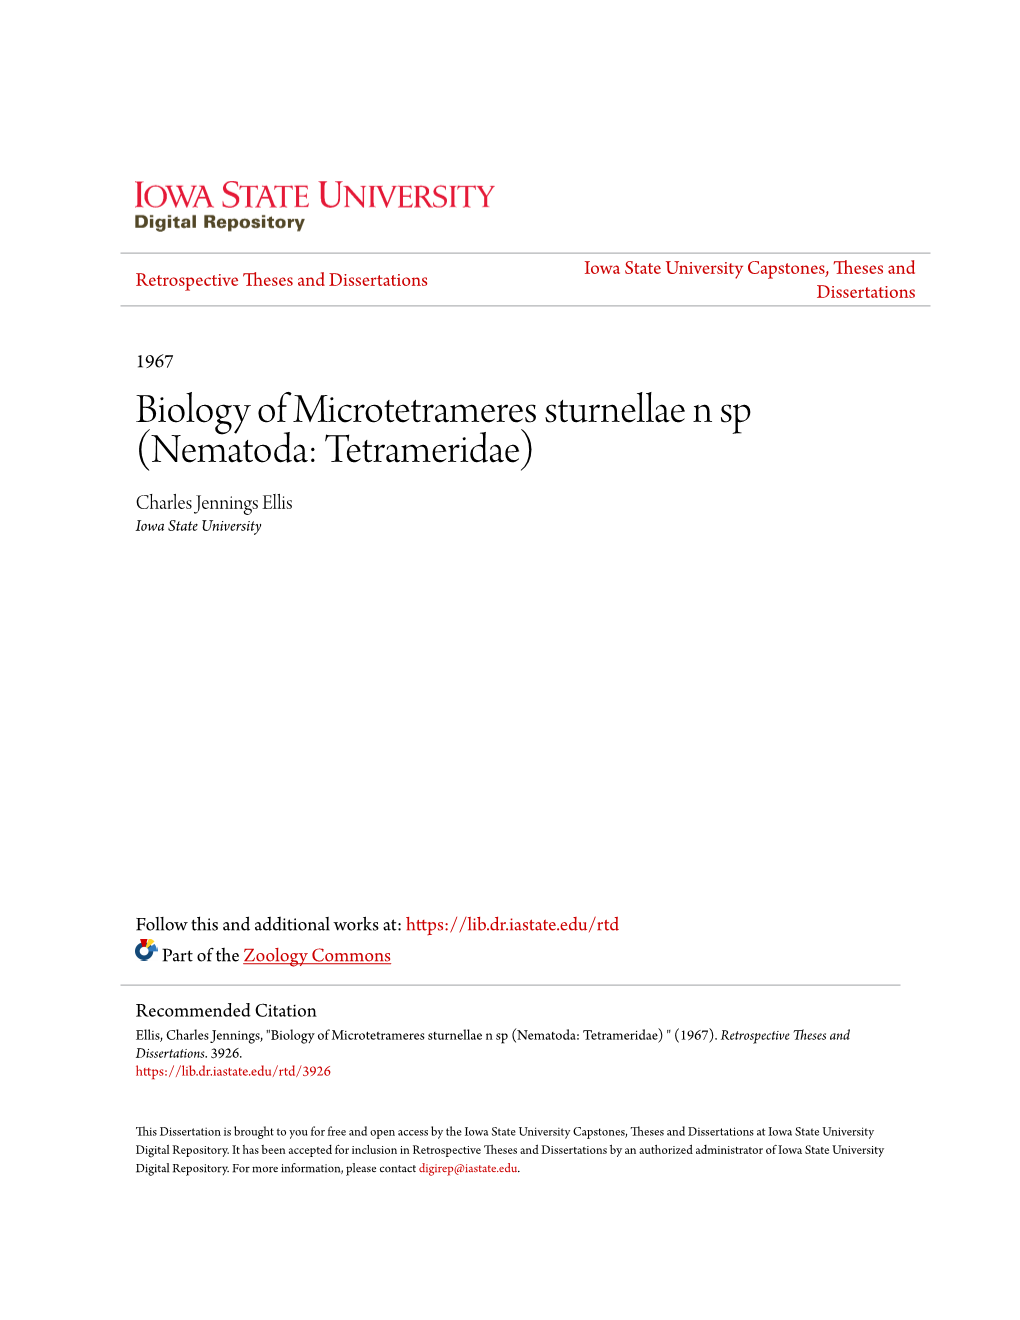 Biology of Microtetrameres Sturnellae N Sp (Nematoda: Tetrameridae) Charles Jennings Ellis Iowa State University